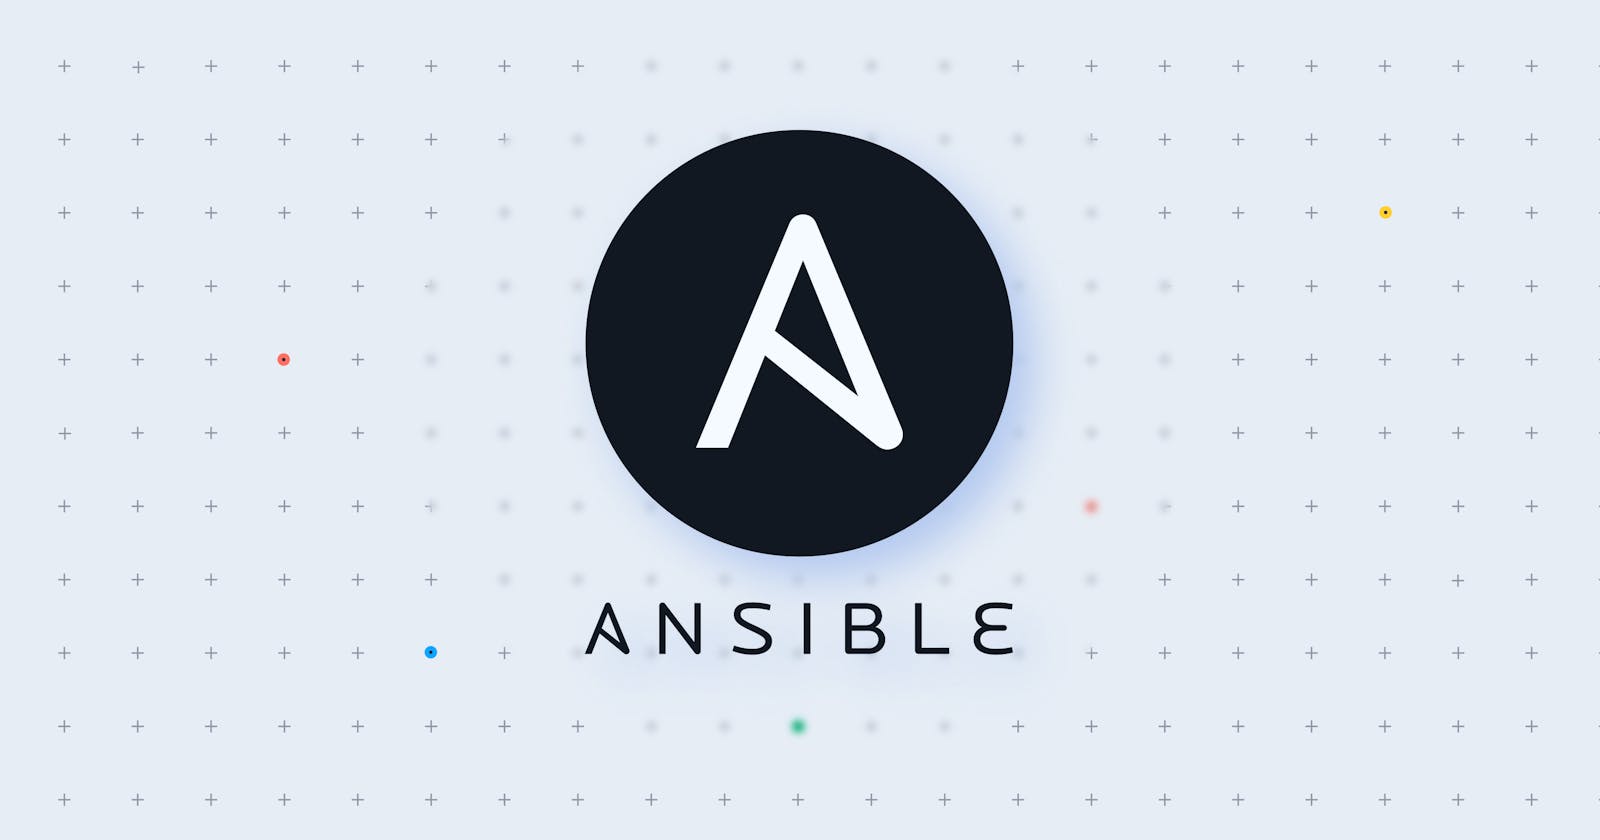 Let's dive into Ansible - P3